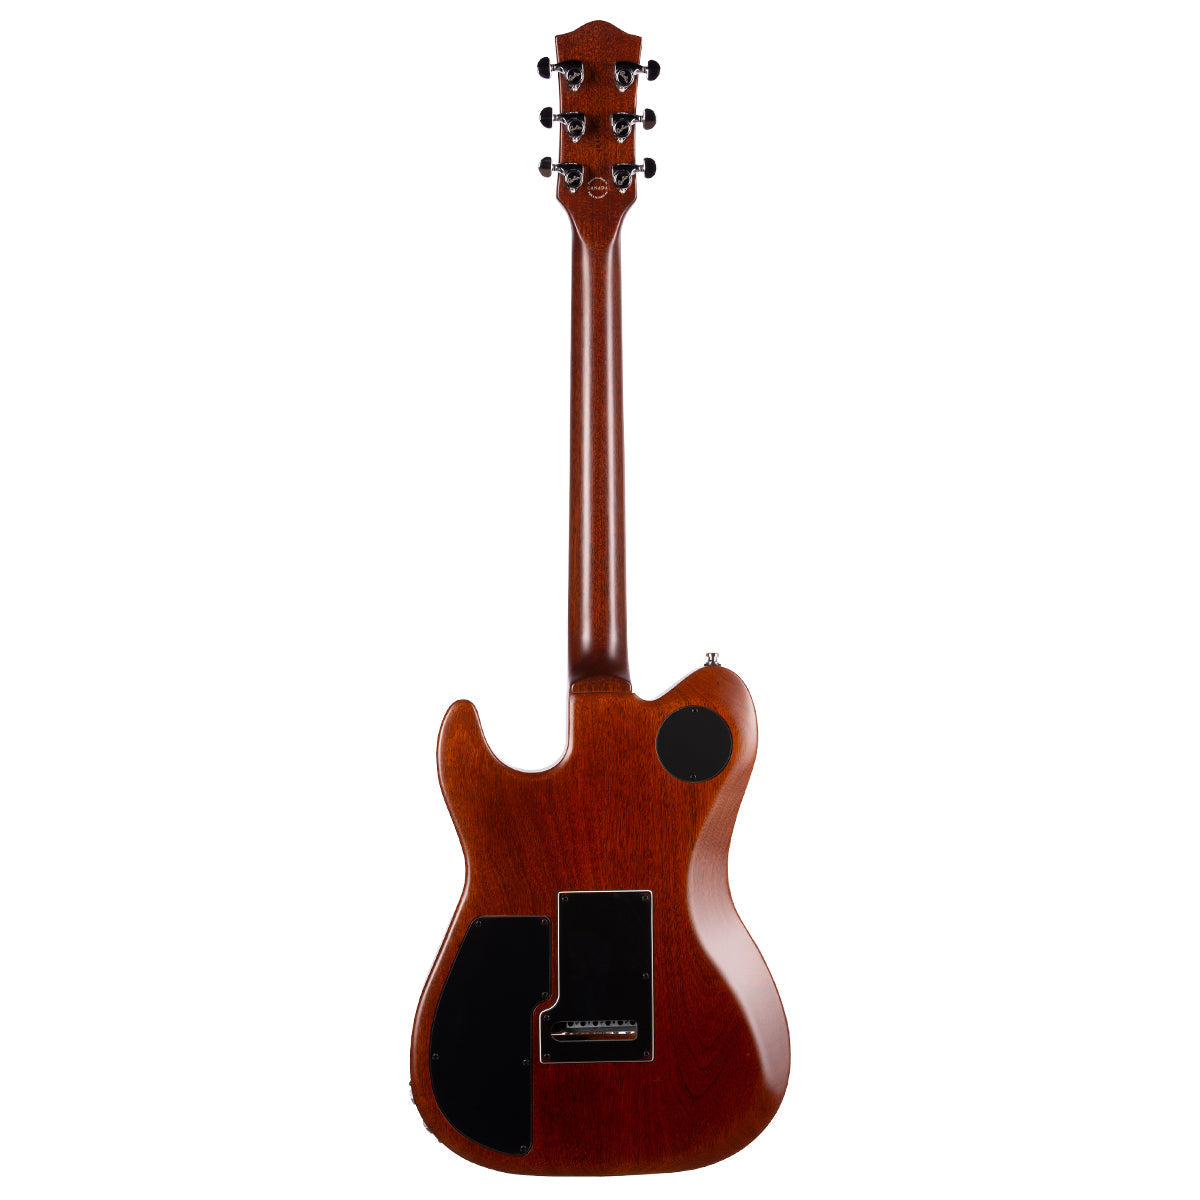 Godin Radium-X Electric Guitar ~ Natural SG, Electric Guitar for sale at Richards Guitars.